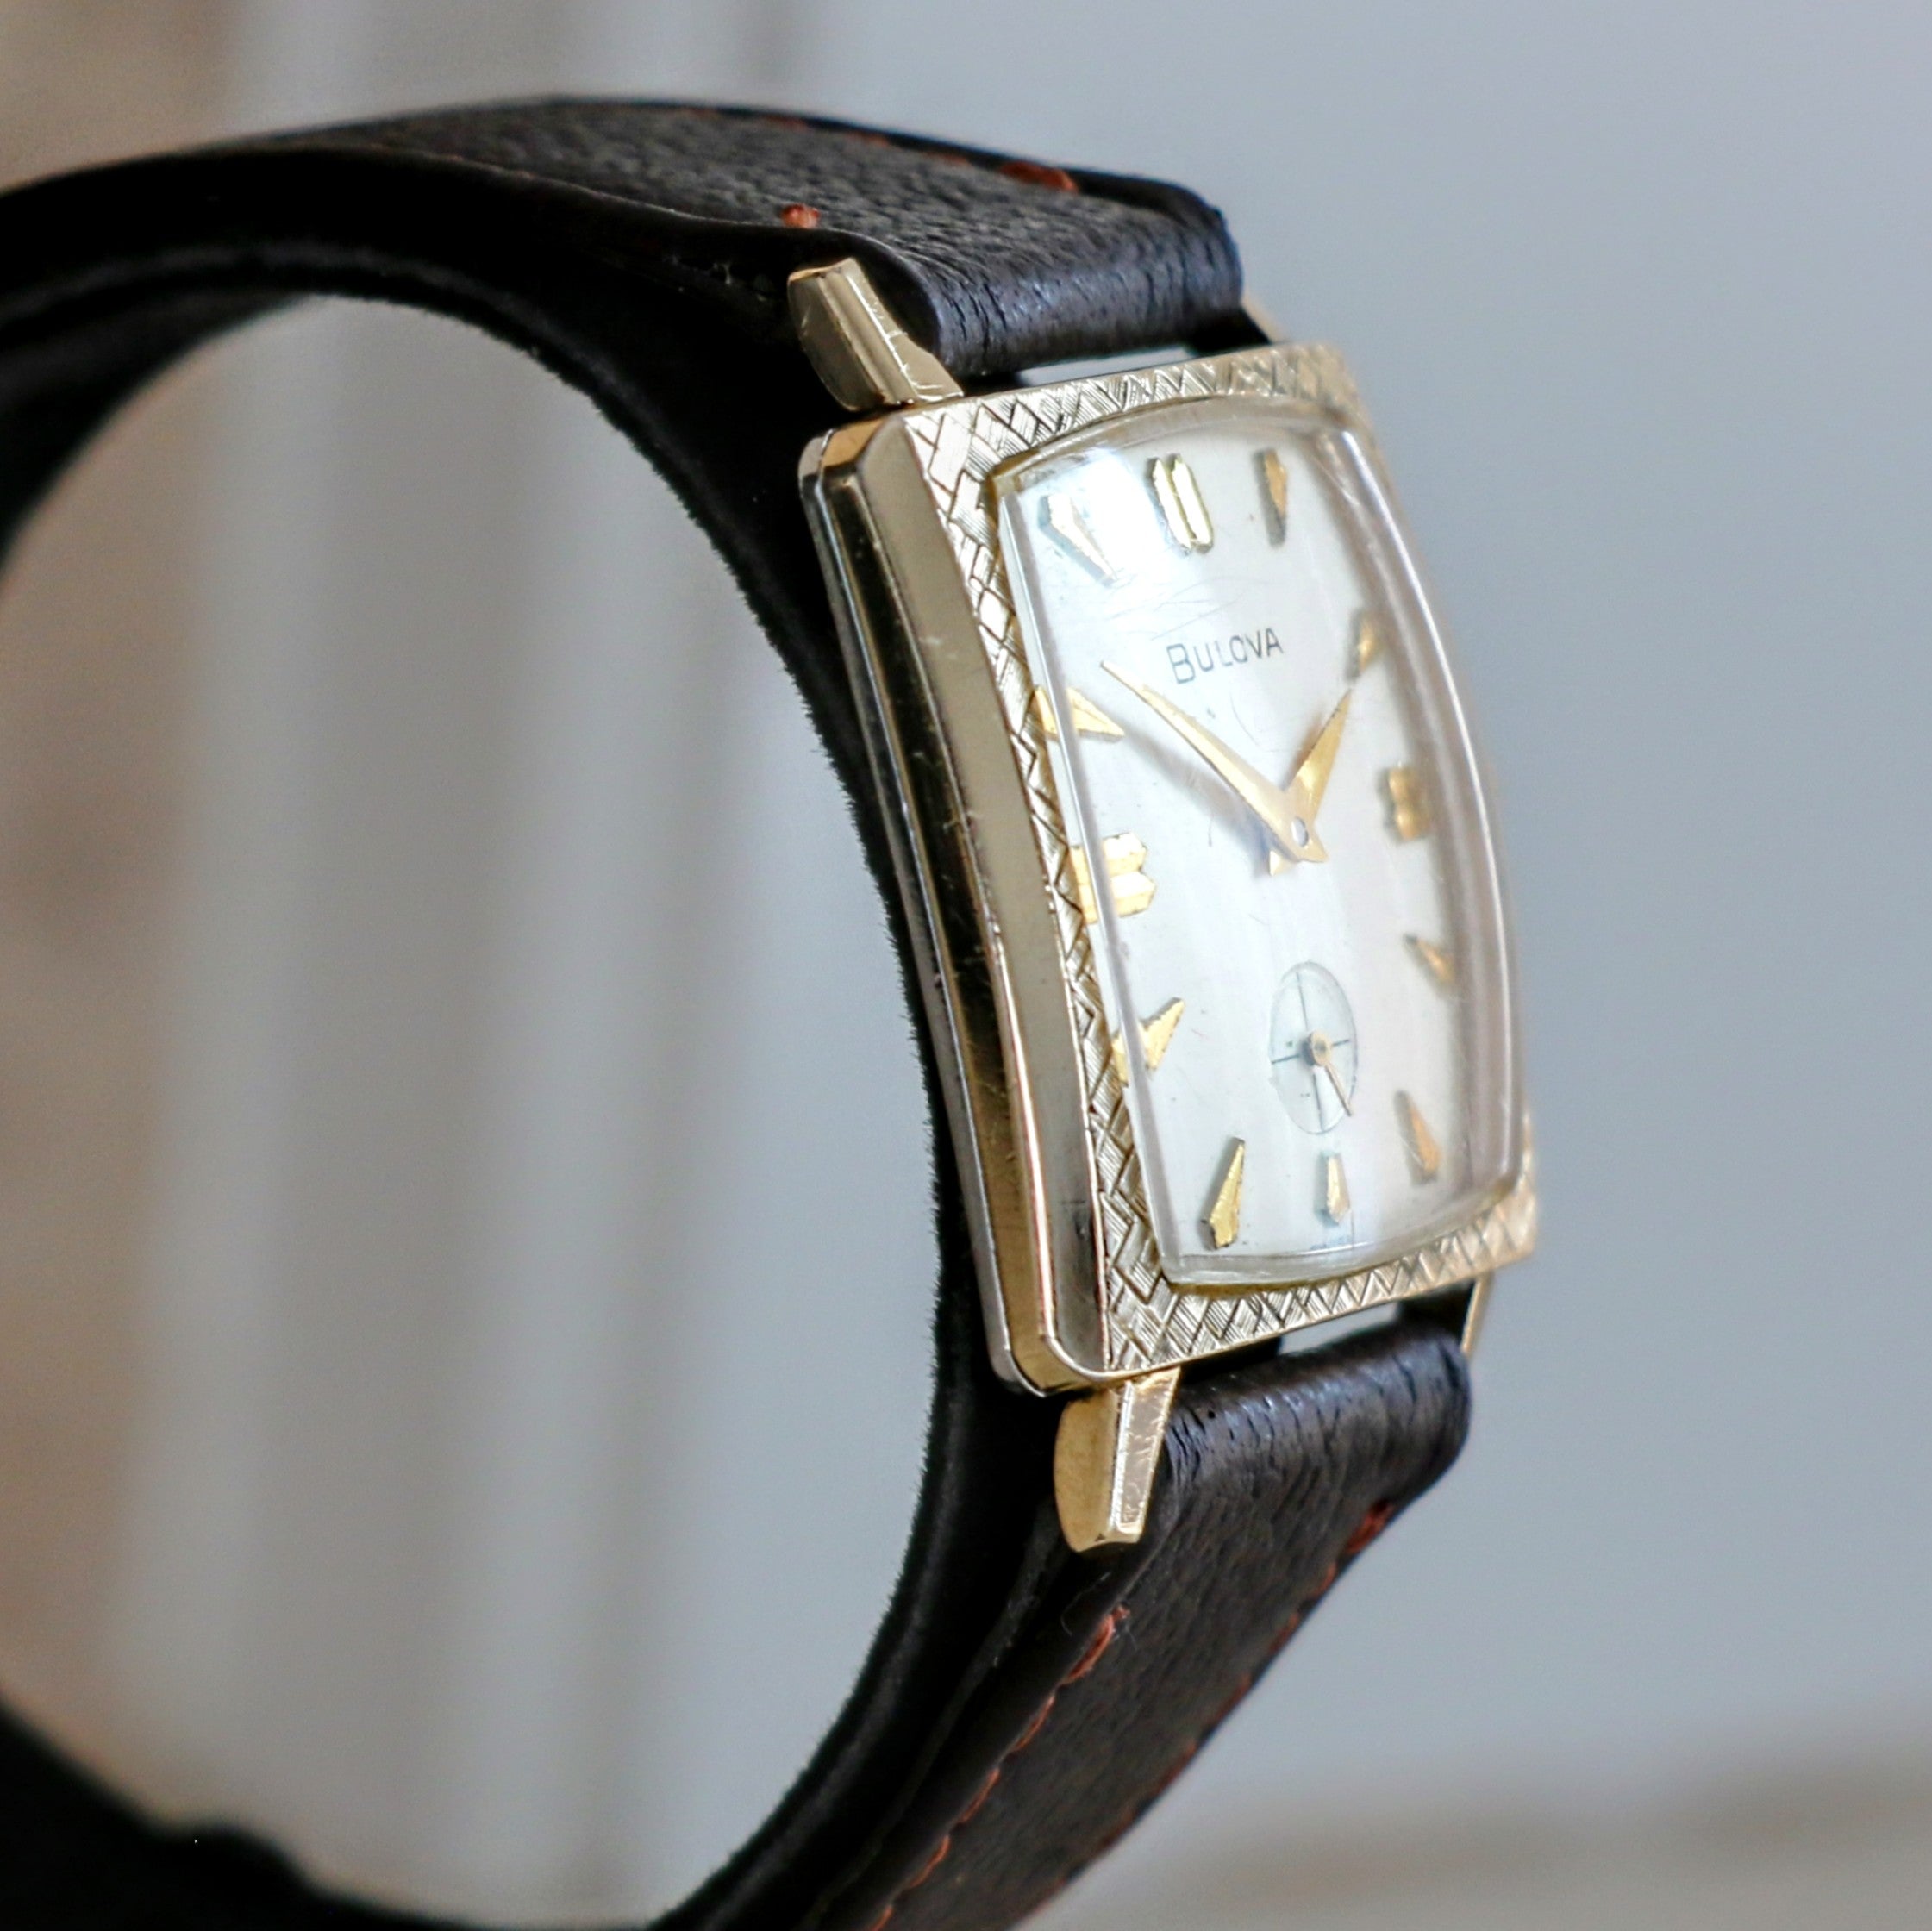 1963 BULOVA Senator “G” Watch Stunning Case Design 17 Jewels Wristwatch